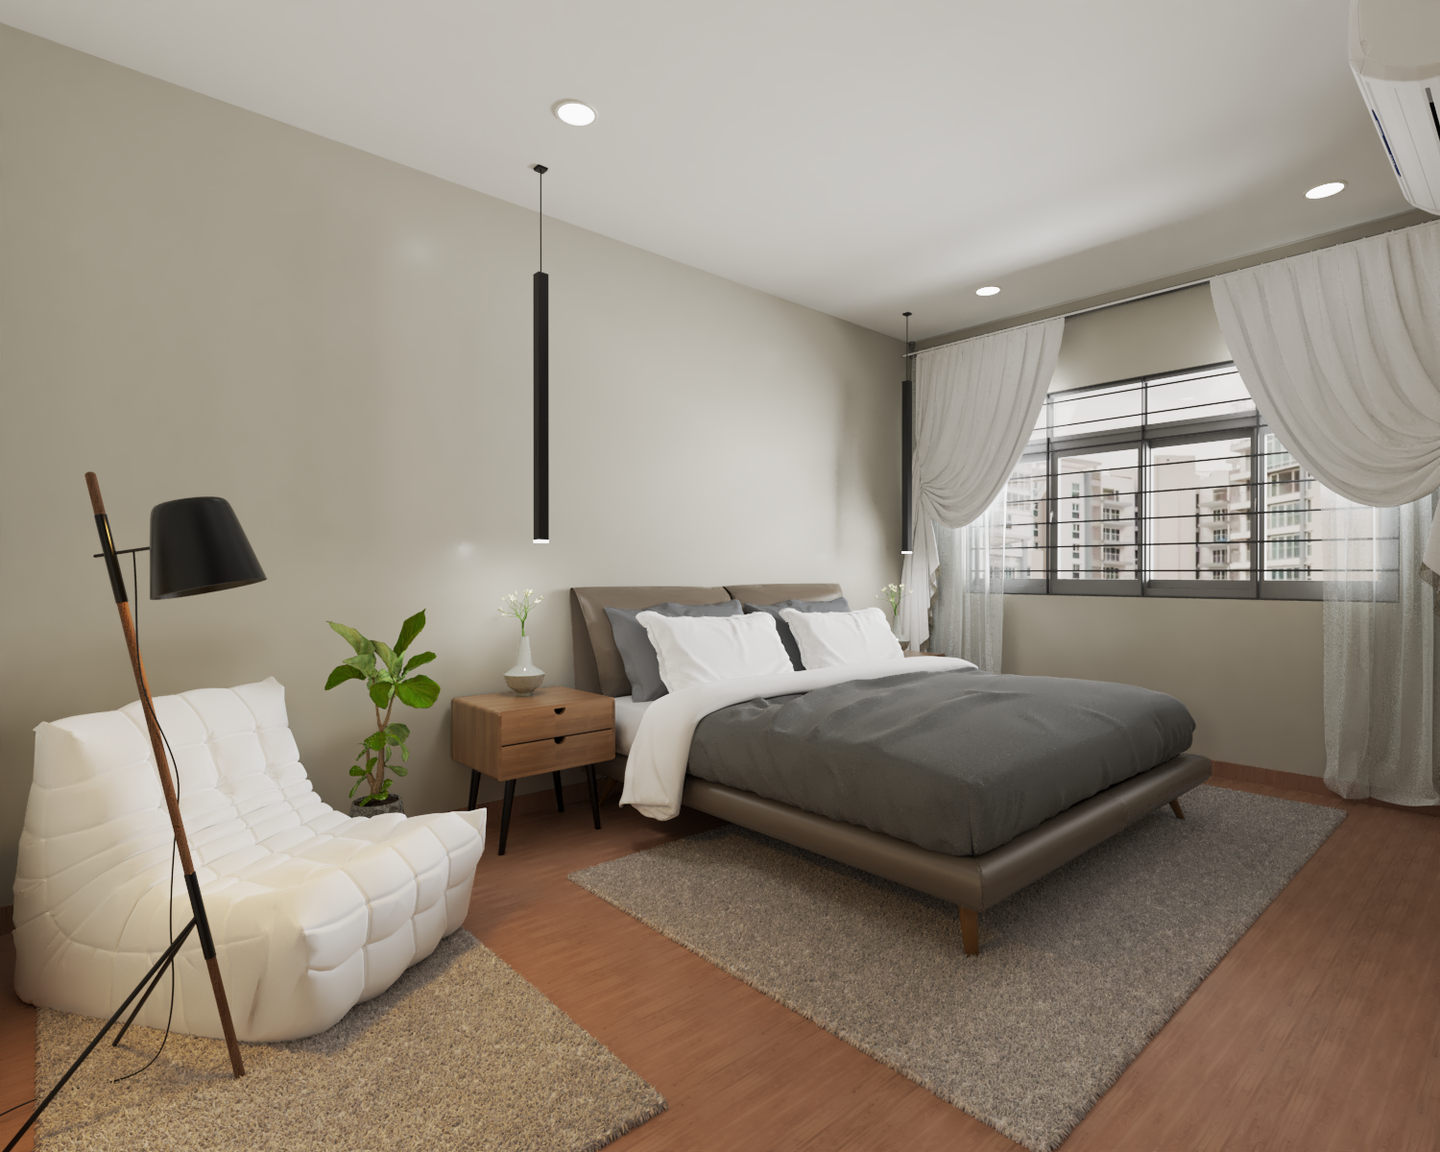 Minimal Spacious Master Bedroom Interior Design with Bean Bag - Livspace